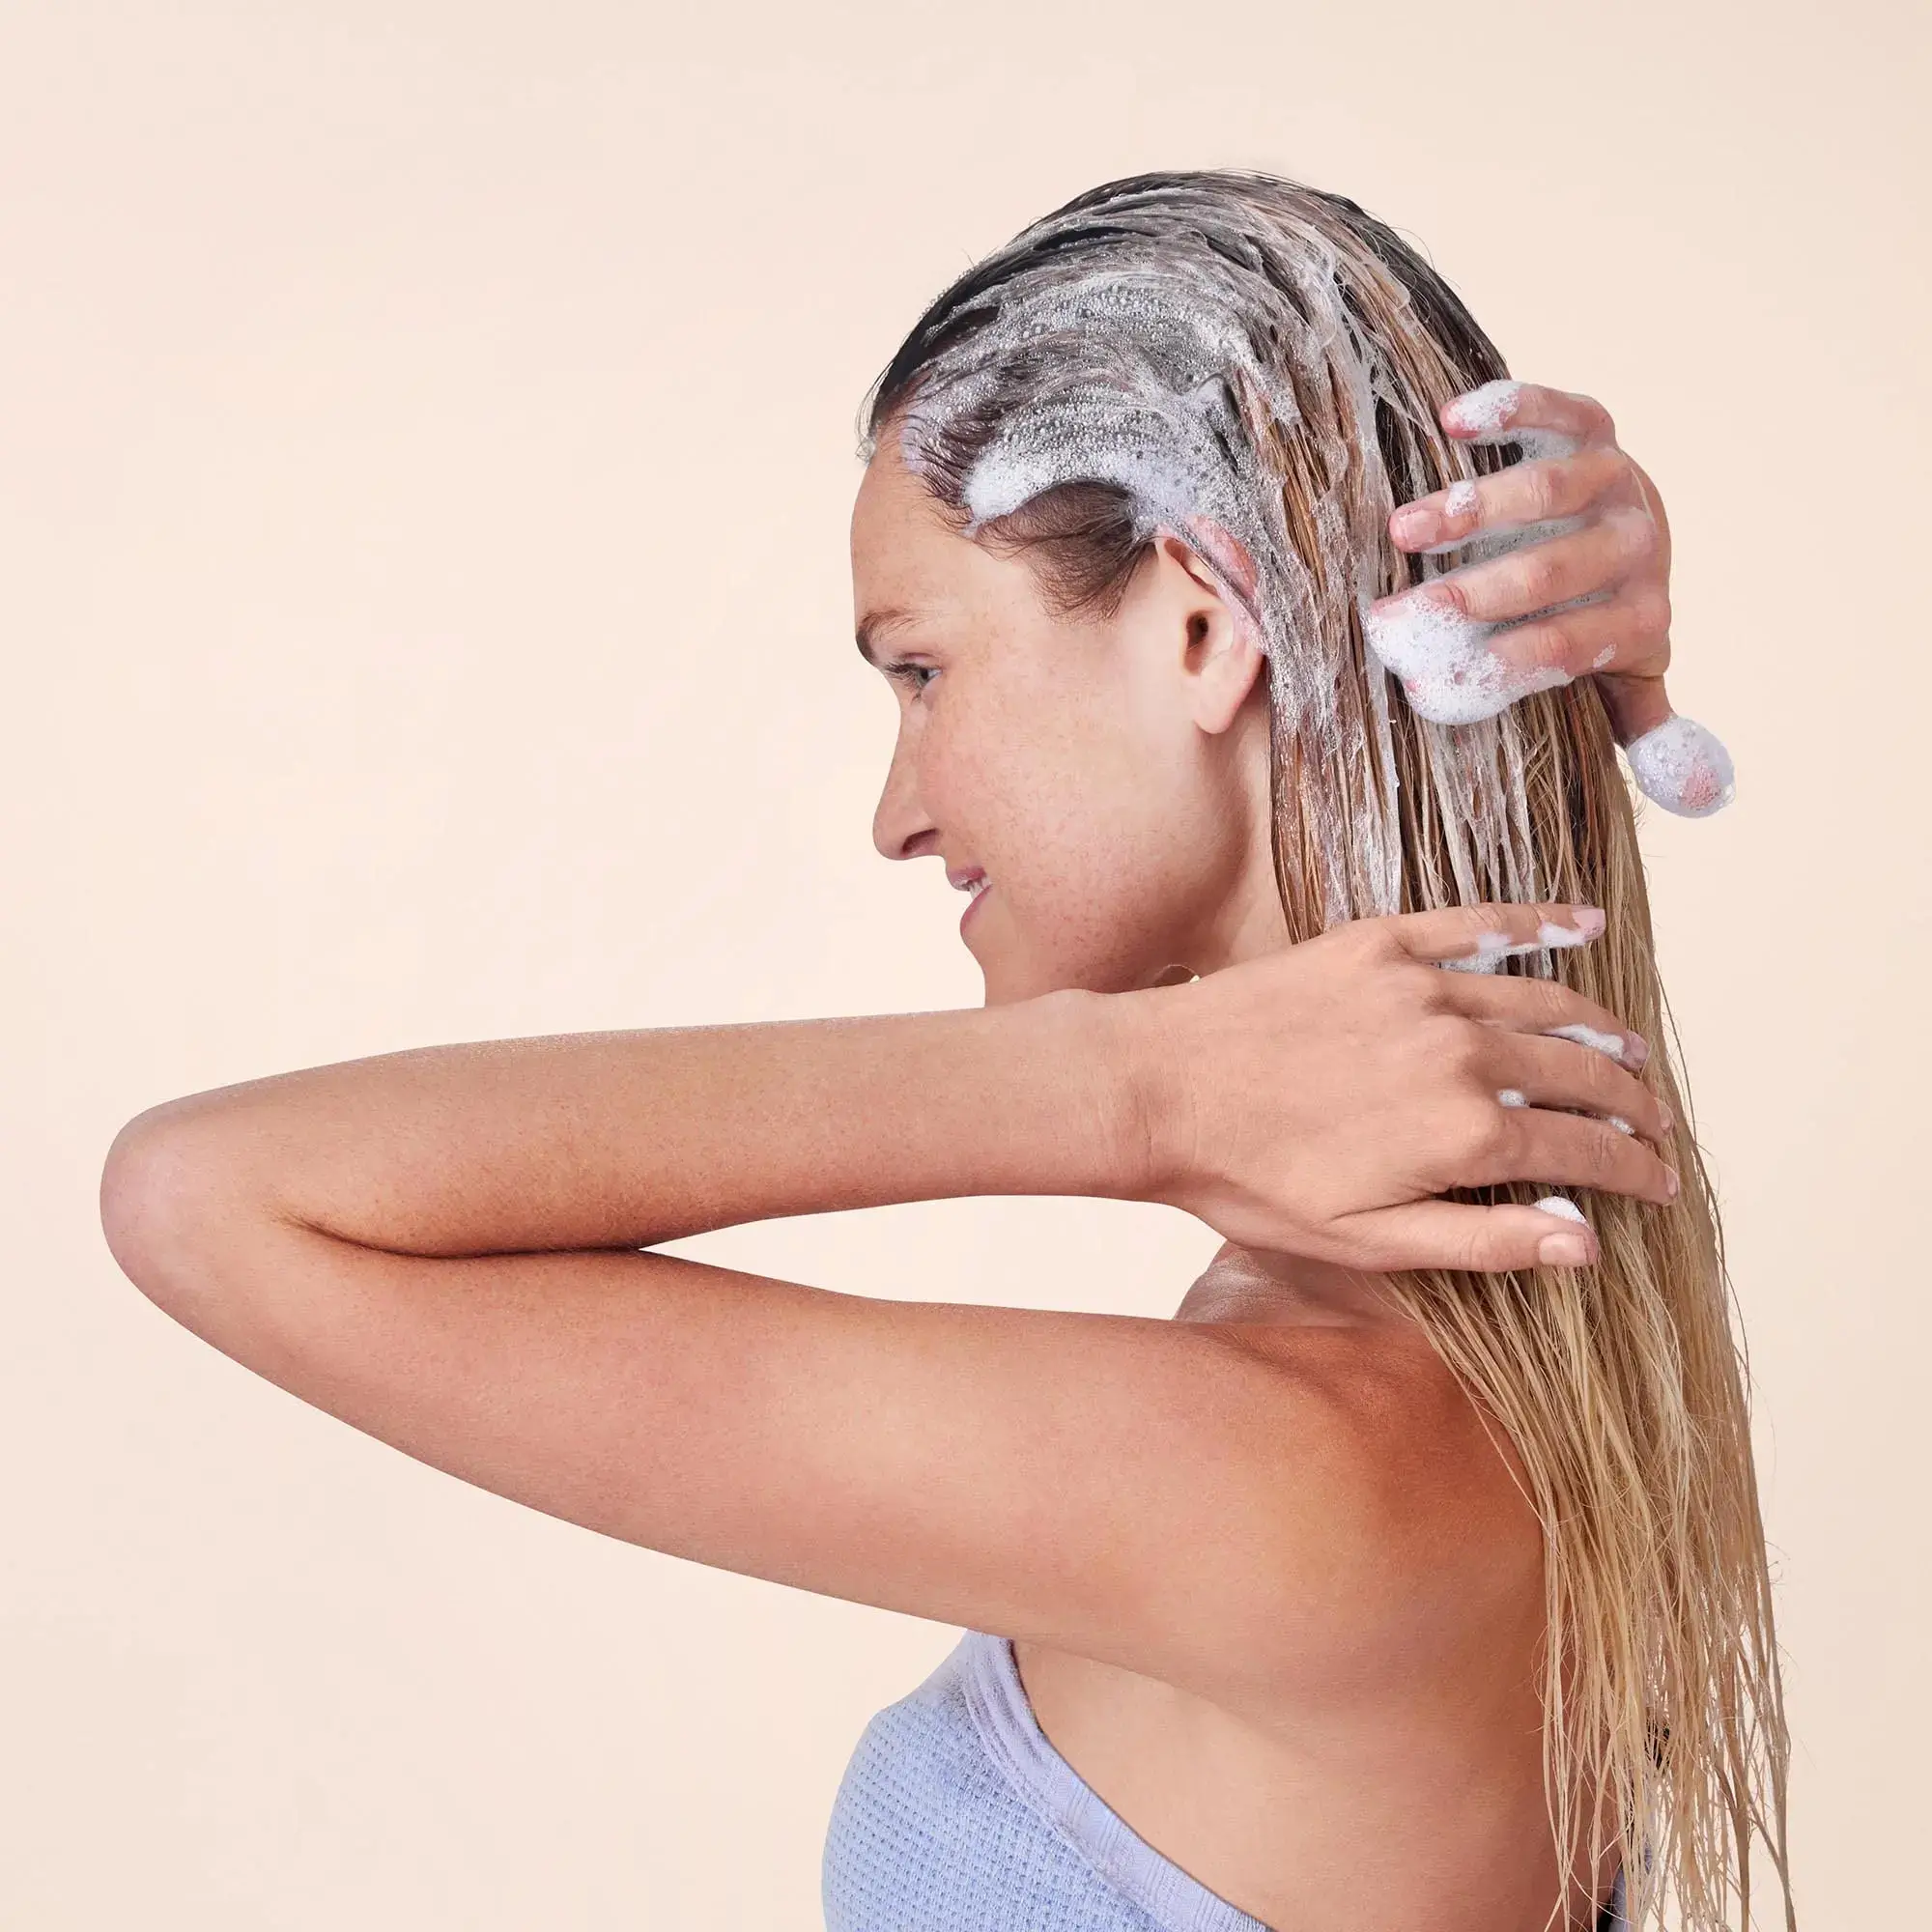 Woman applying shampoo to her hair.